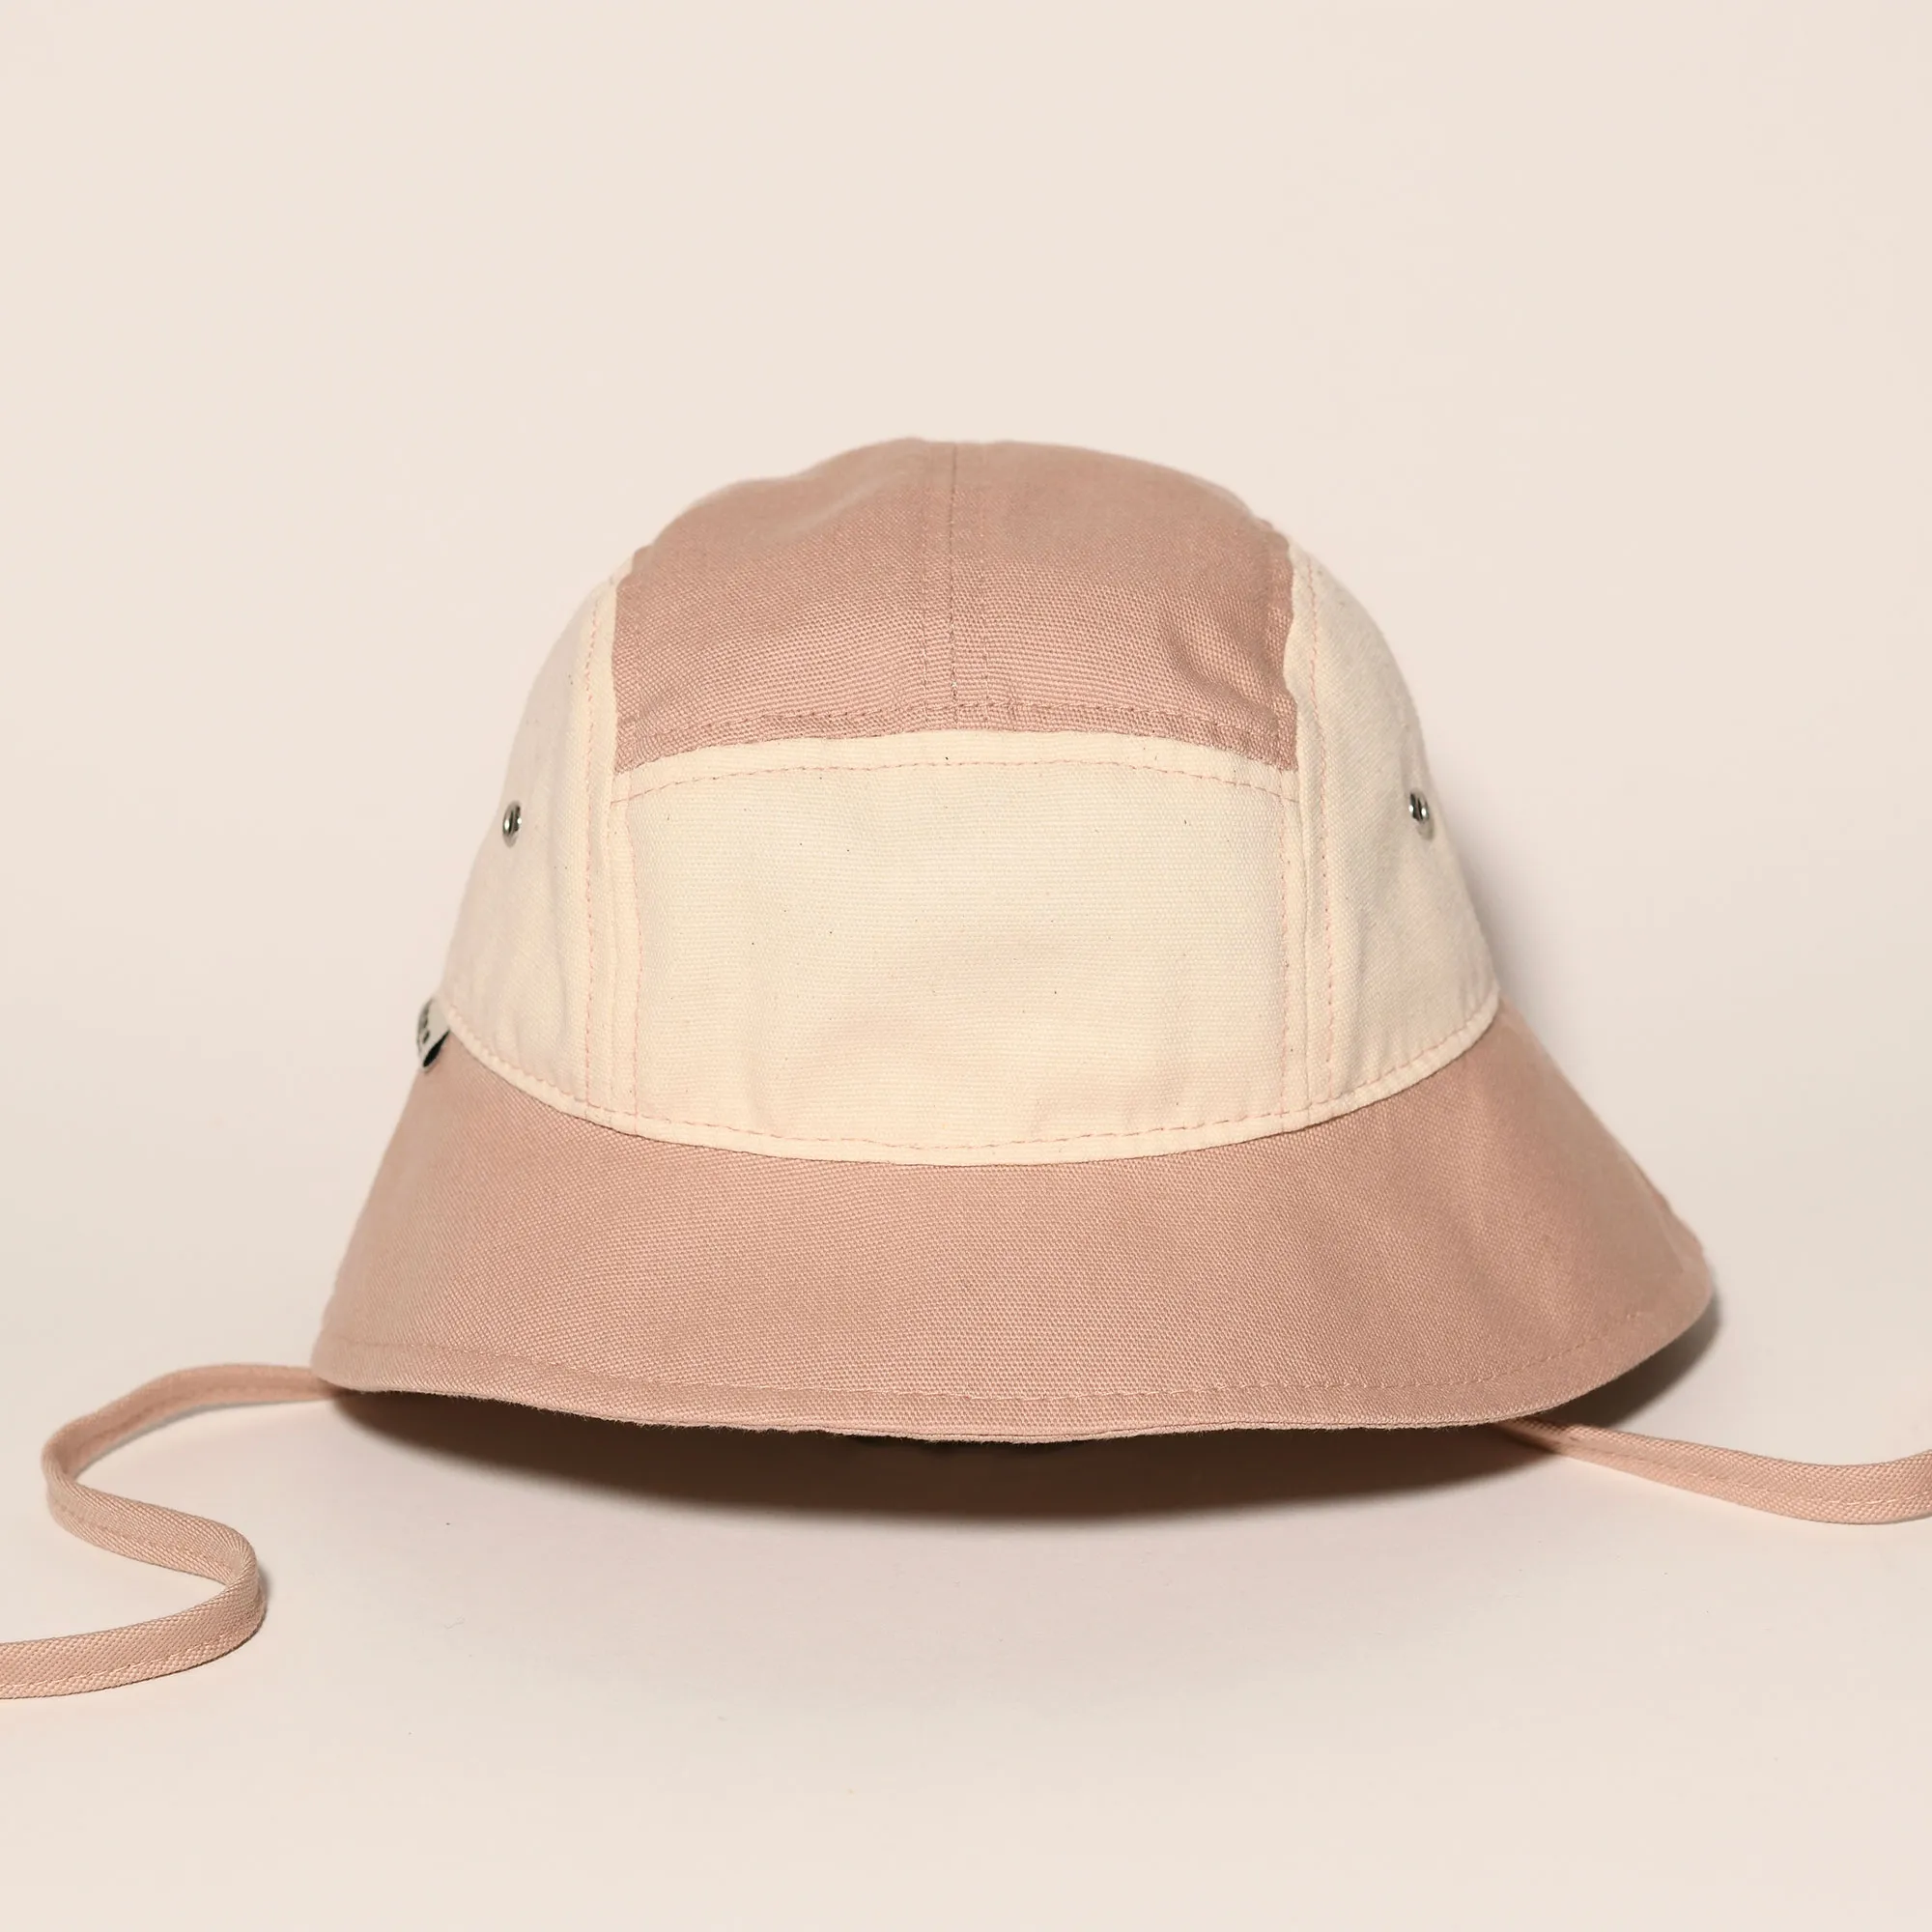 KiETLA klobúčik s UV ochranou 1-2 roky - Natural / Pink 1×1 ks, detský klobúčik